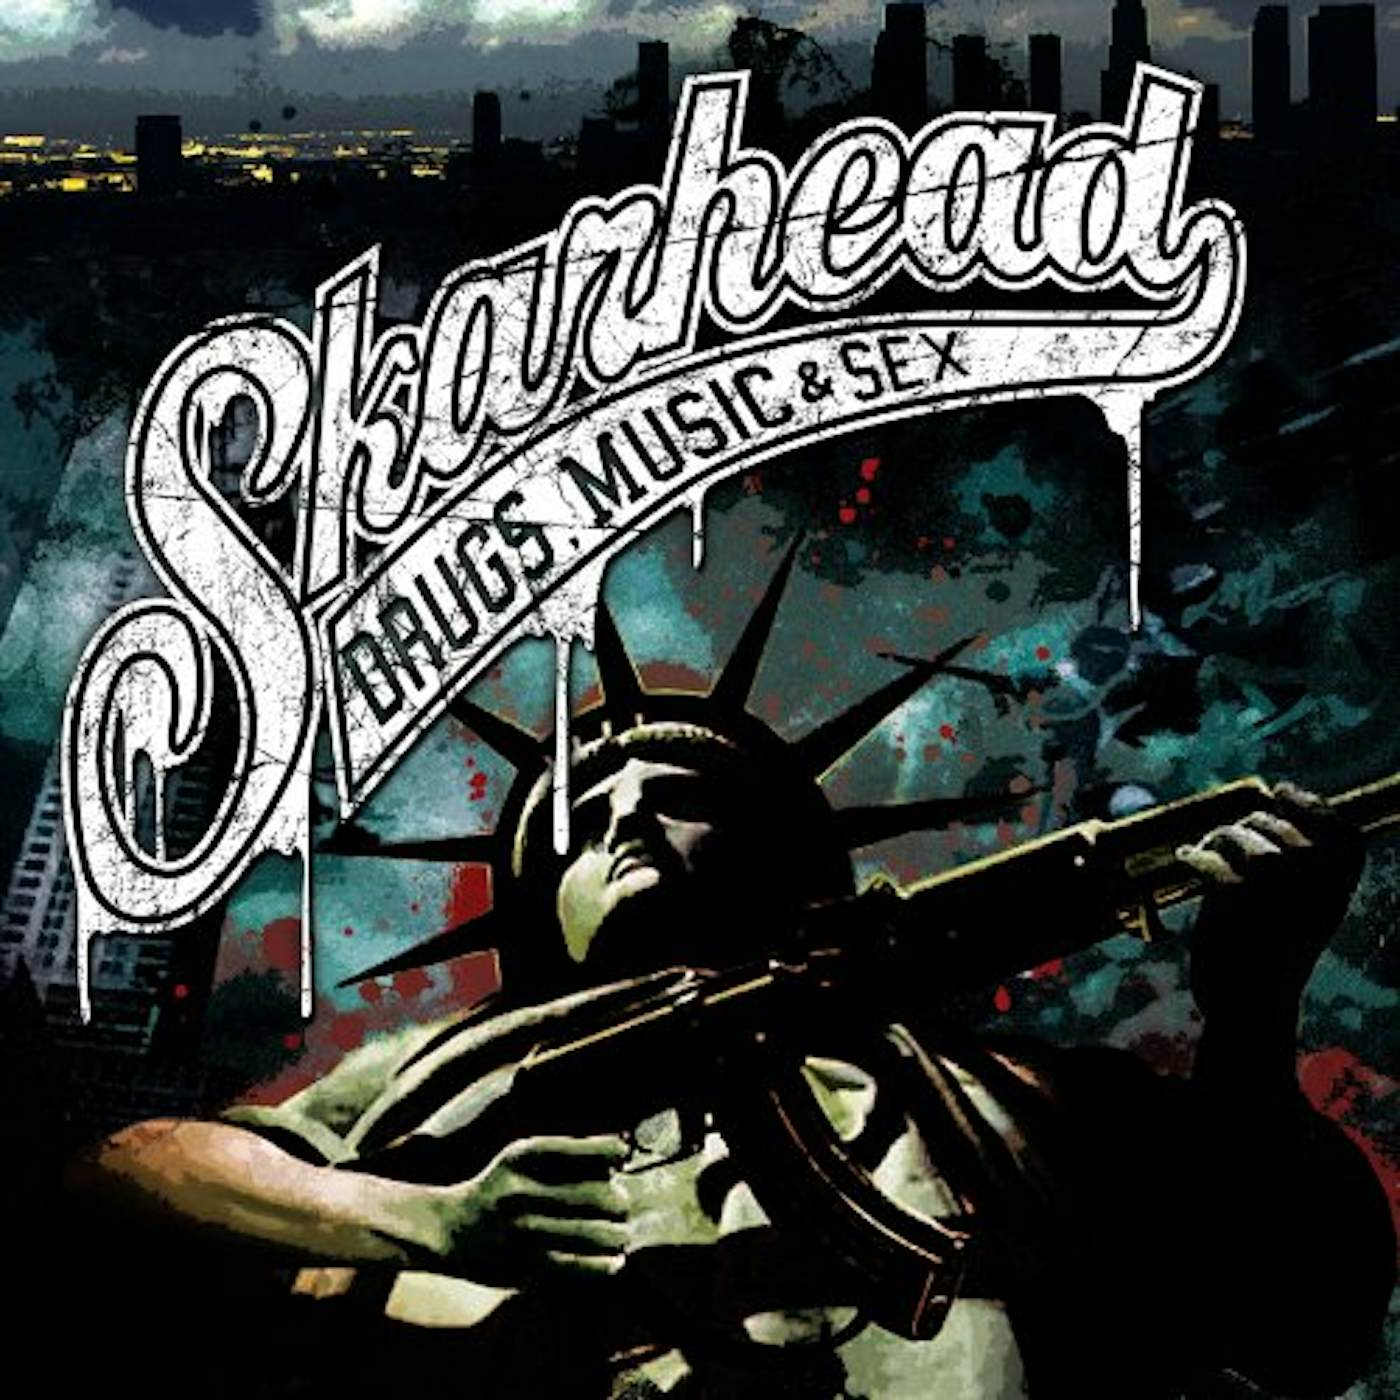 Skarhead DRUGS MUSIC & SEX CD